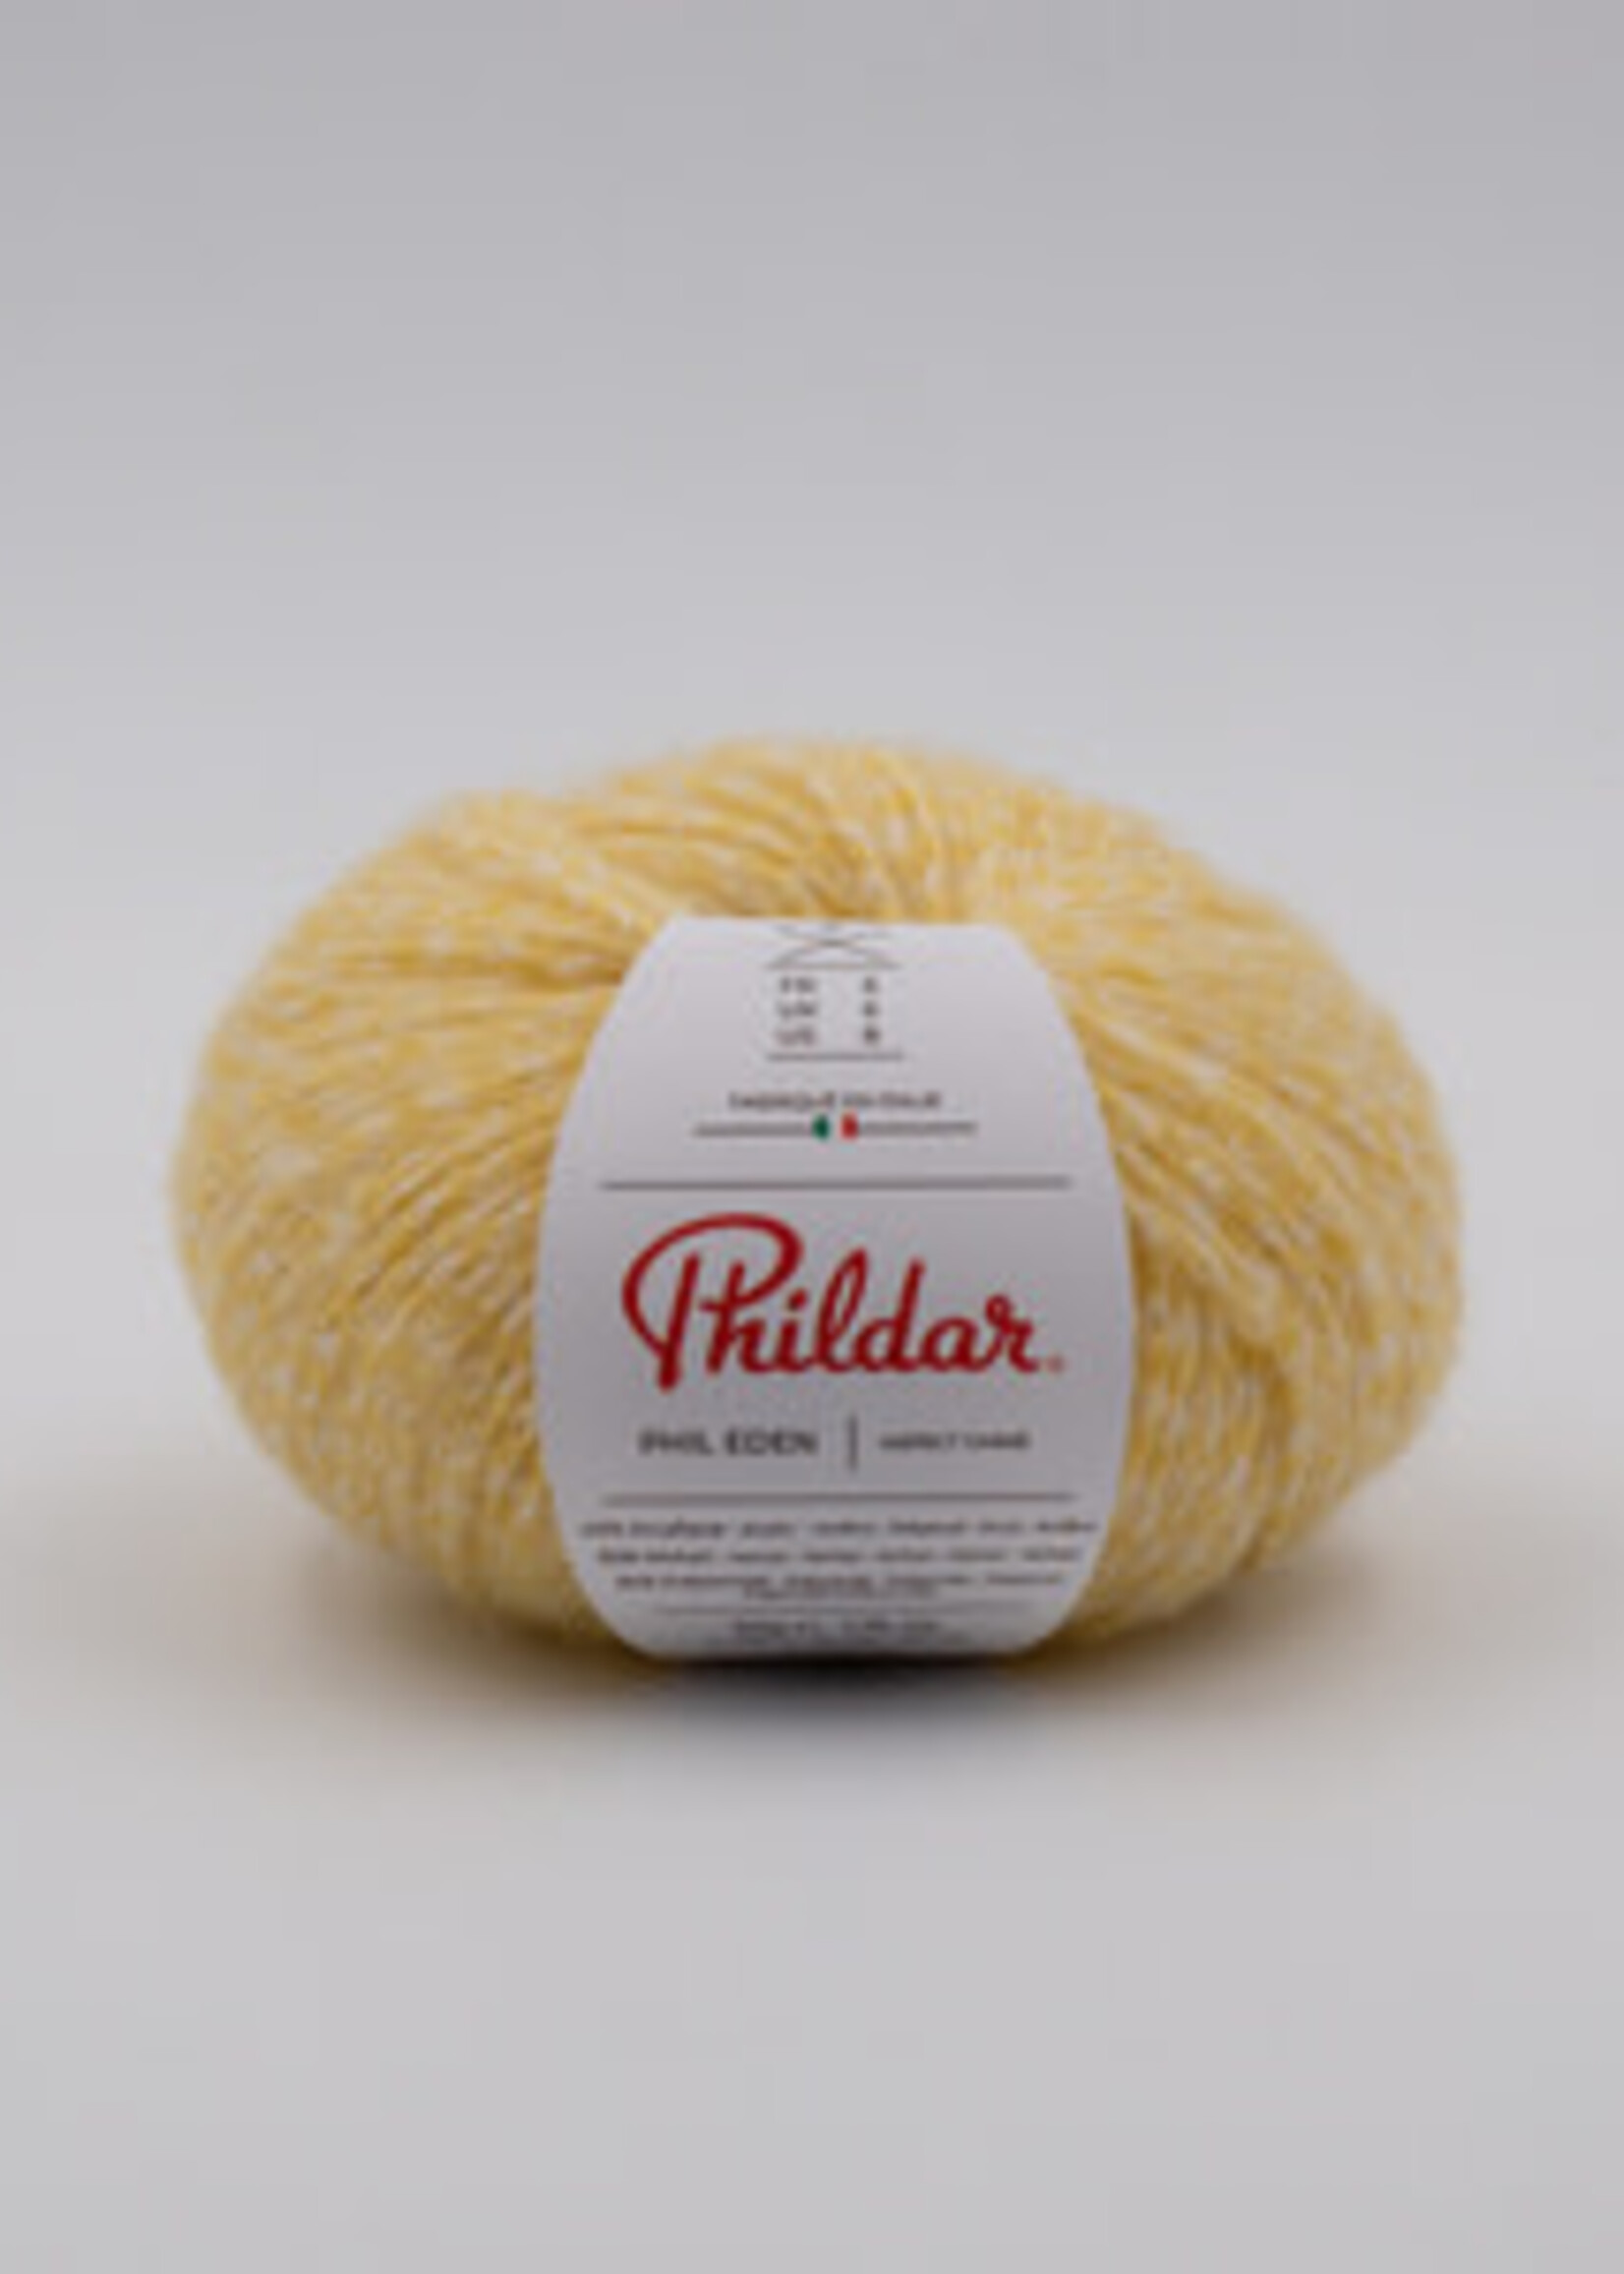 Phildar Phil Eden -pollen - Phildar